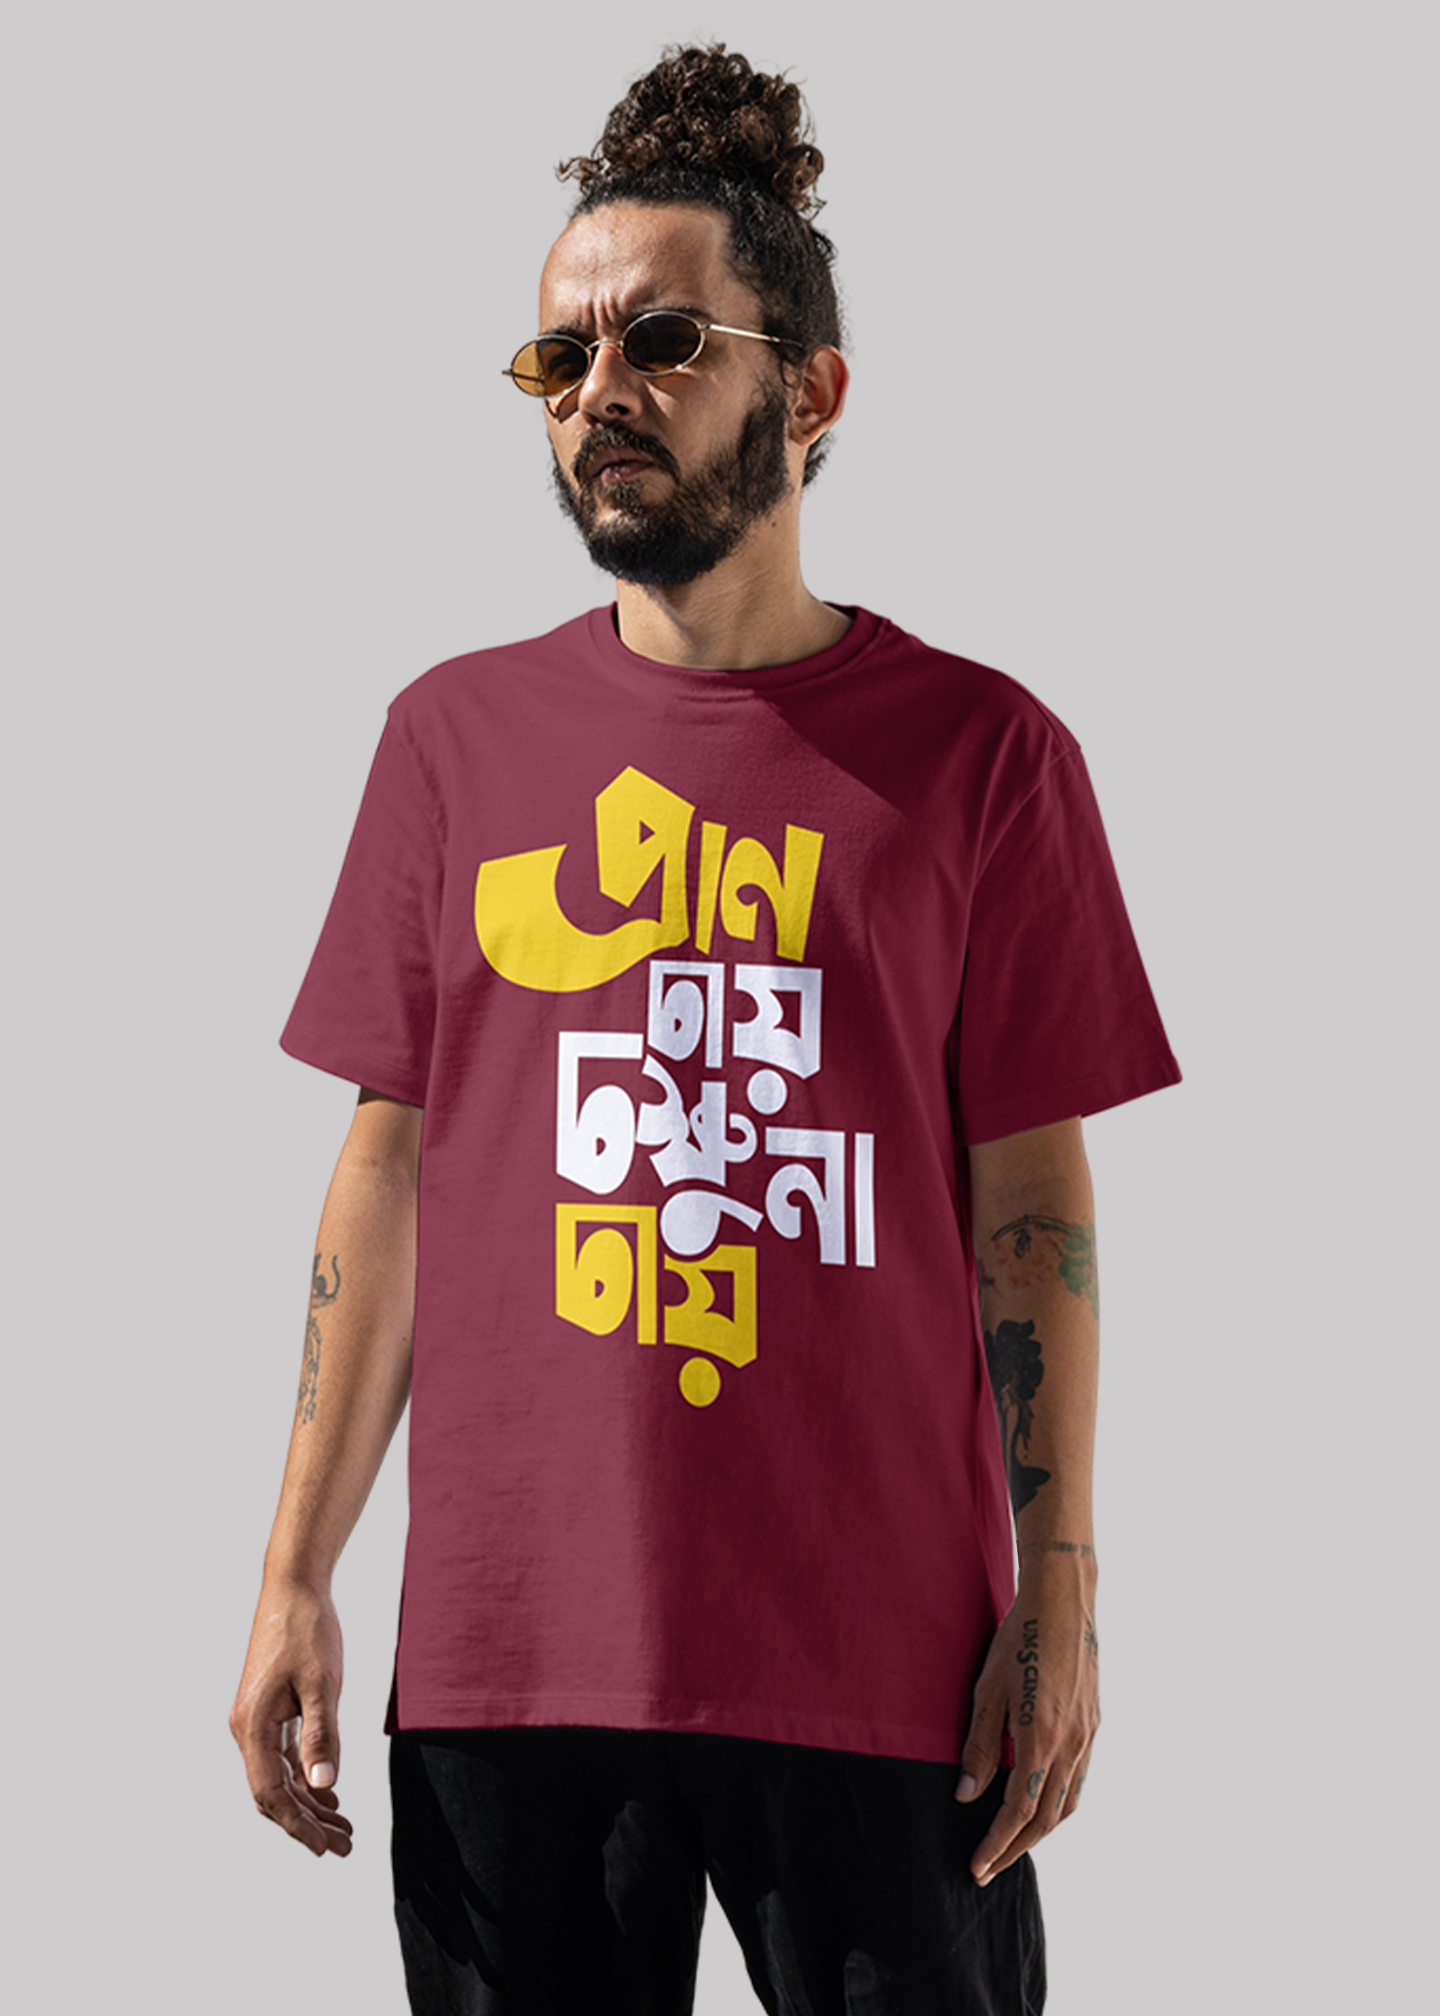 Pran chay typography  Printed Half Sleeve Premium Cotton T-shirt For Men